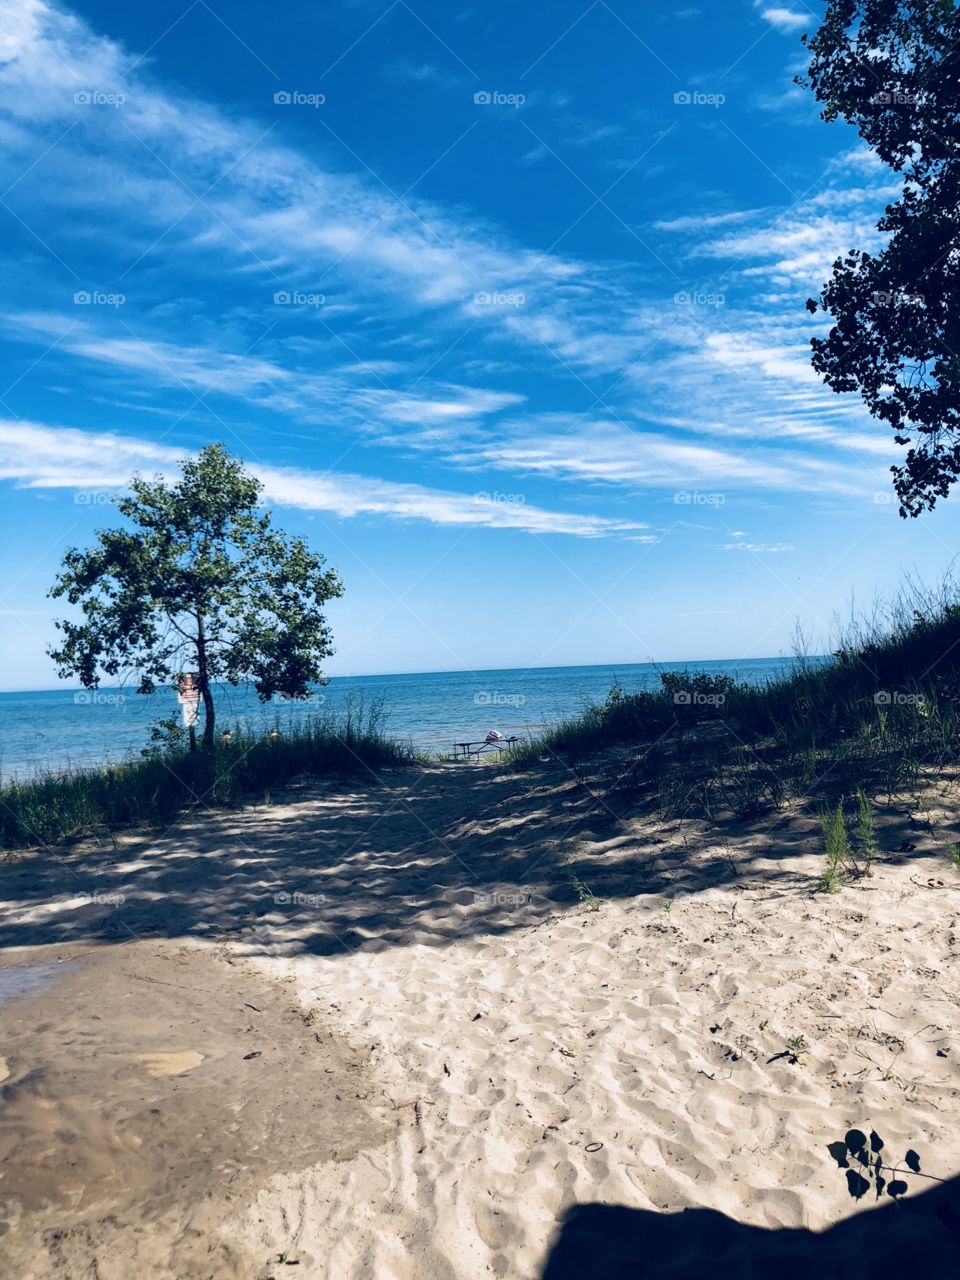 Beach scene 